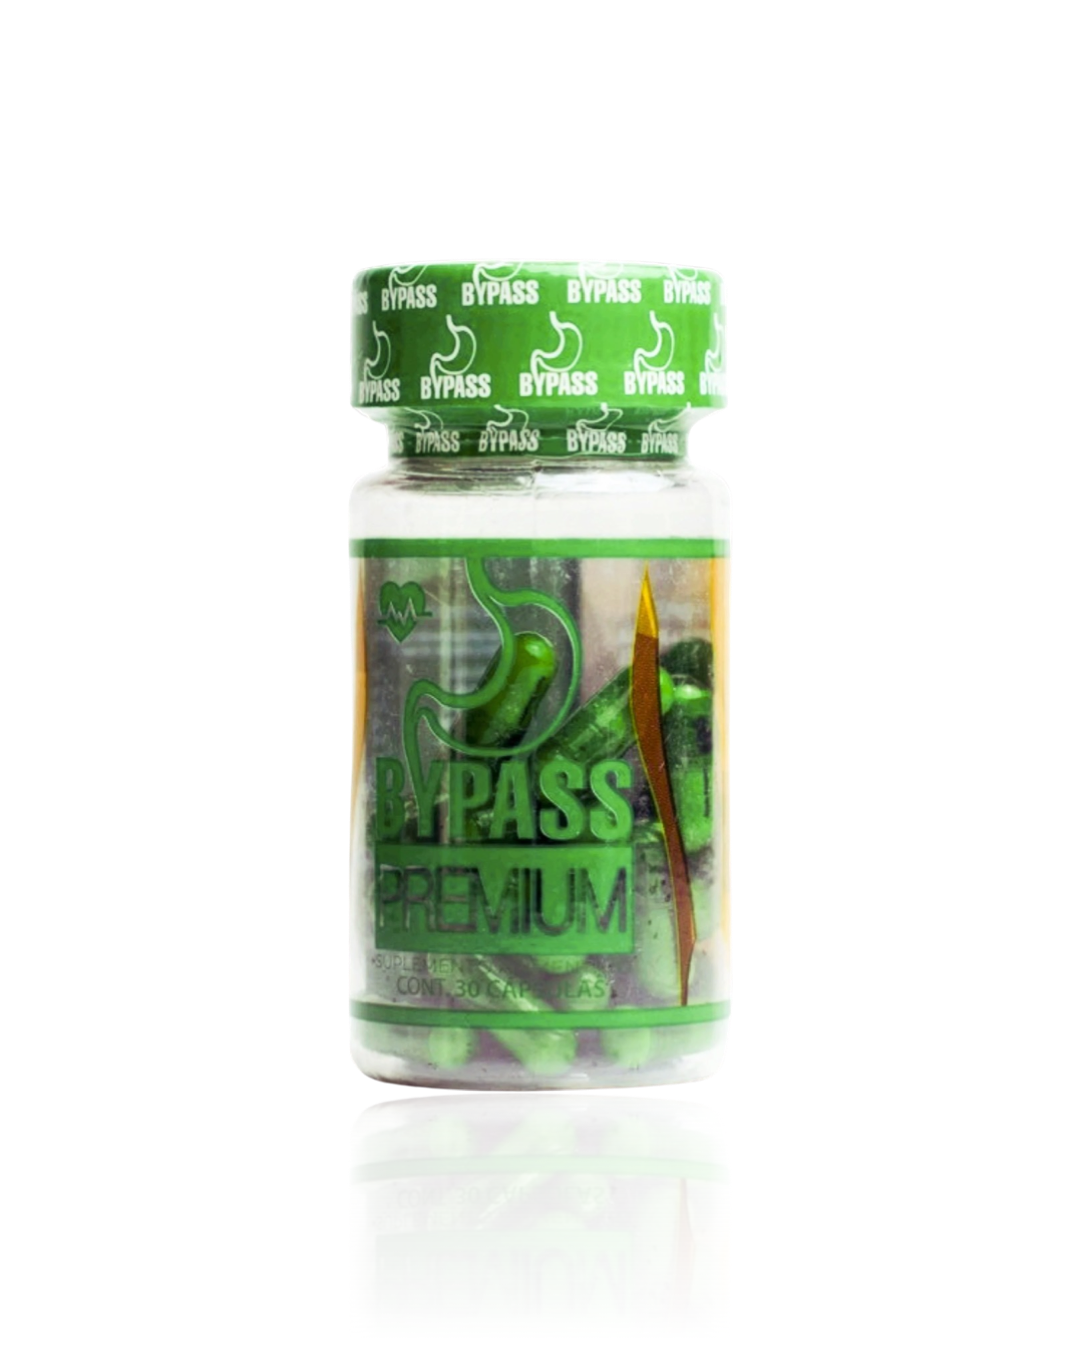   Bypass Premium Verde 